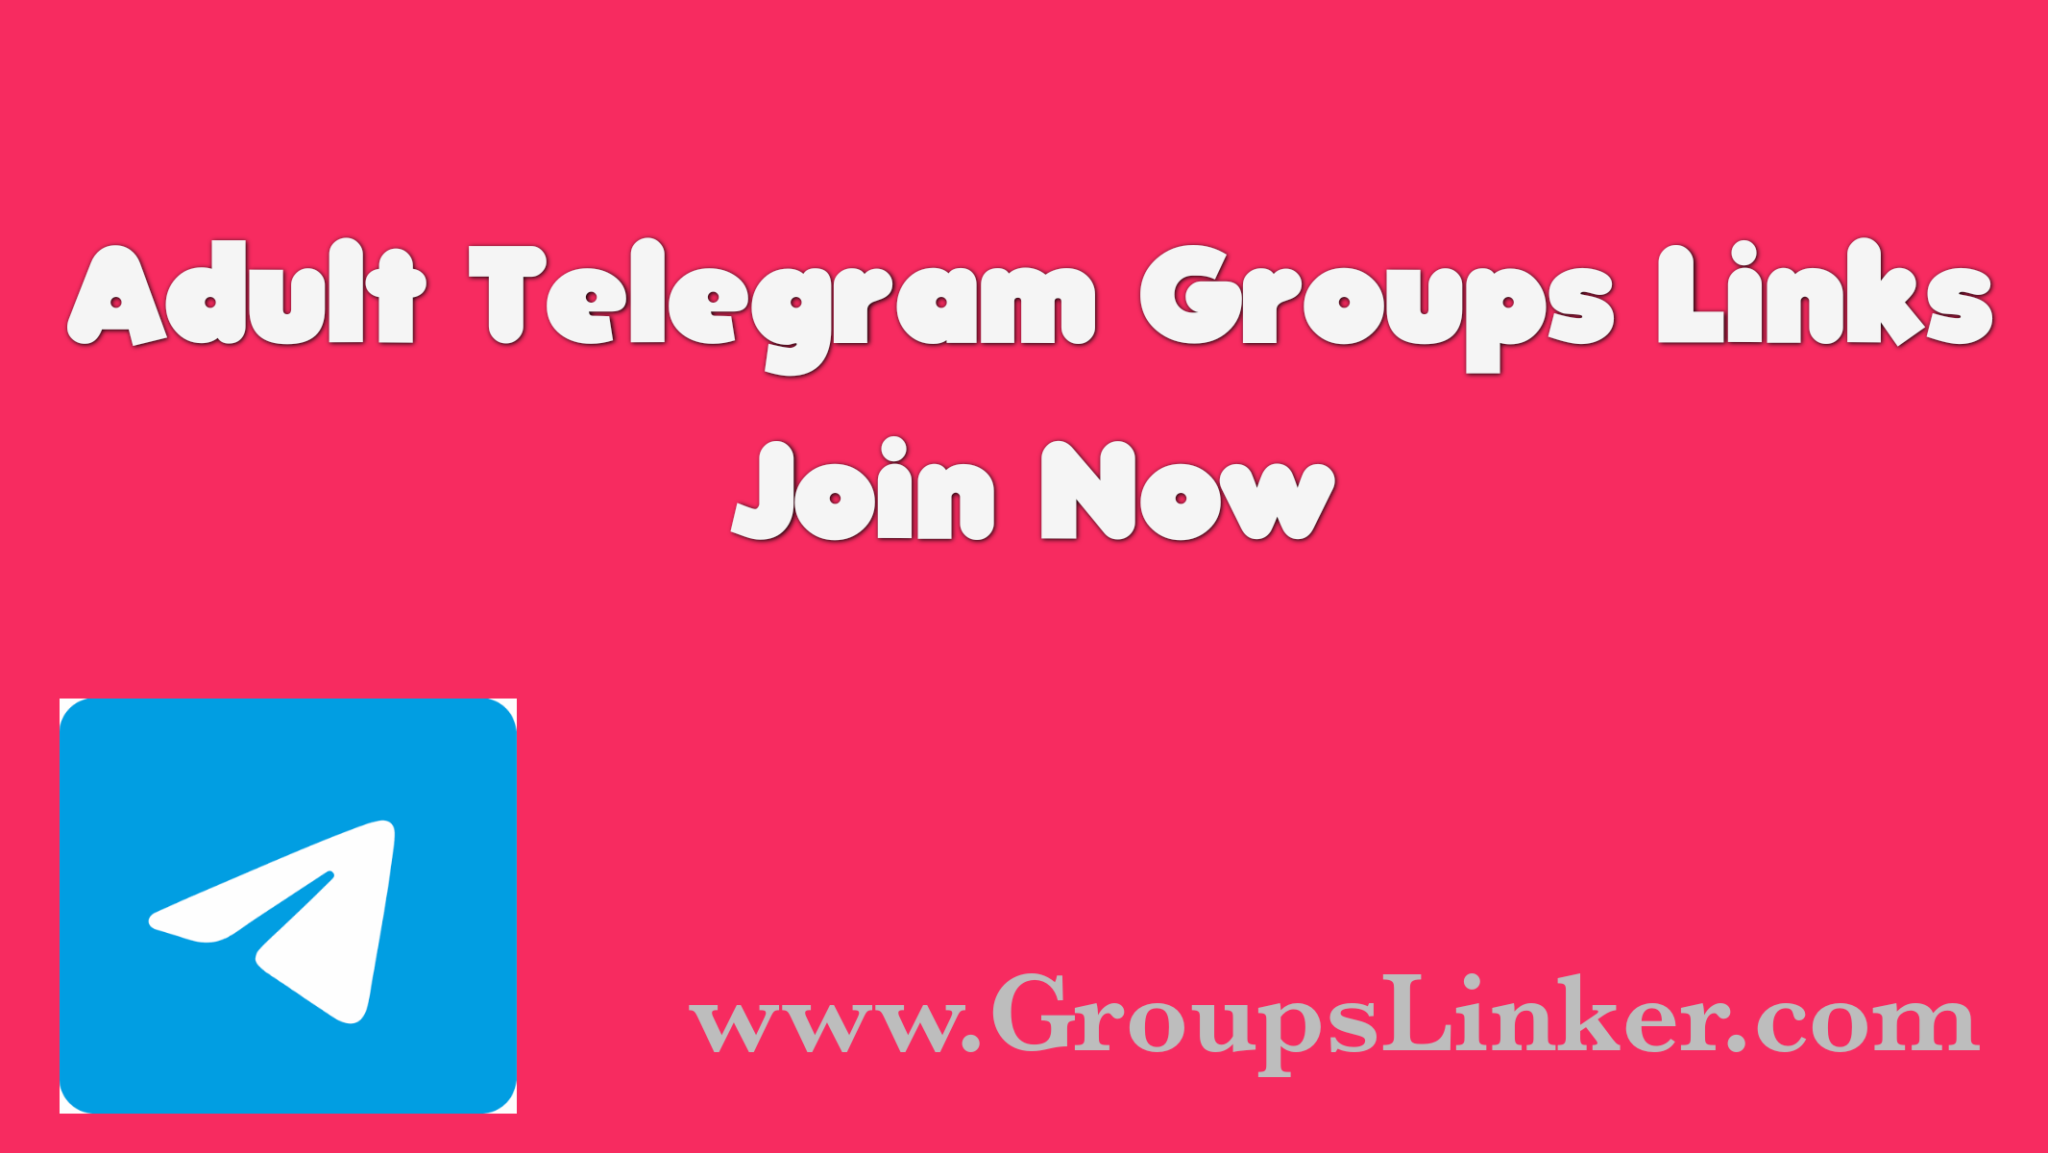 Adult group links telegram